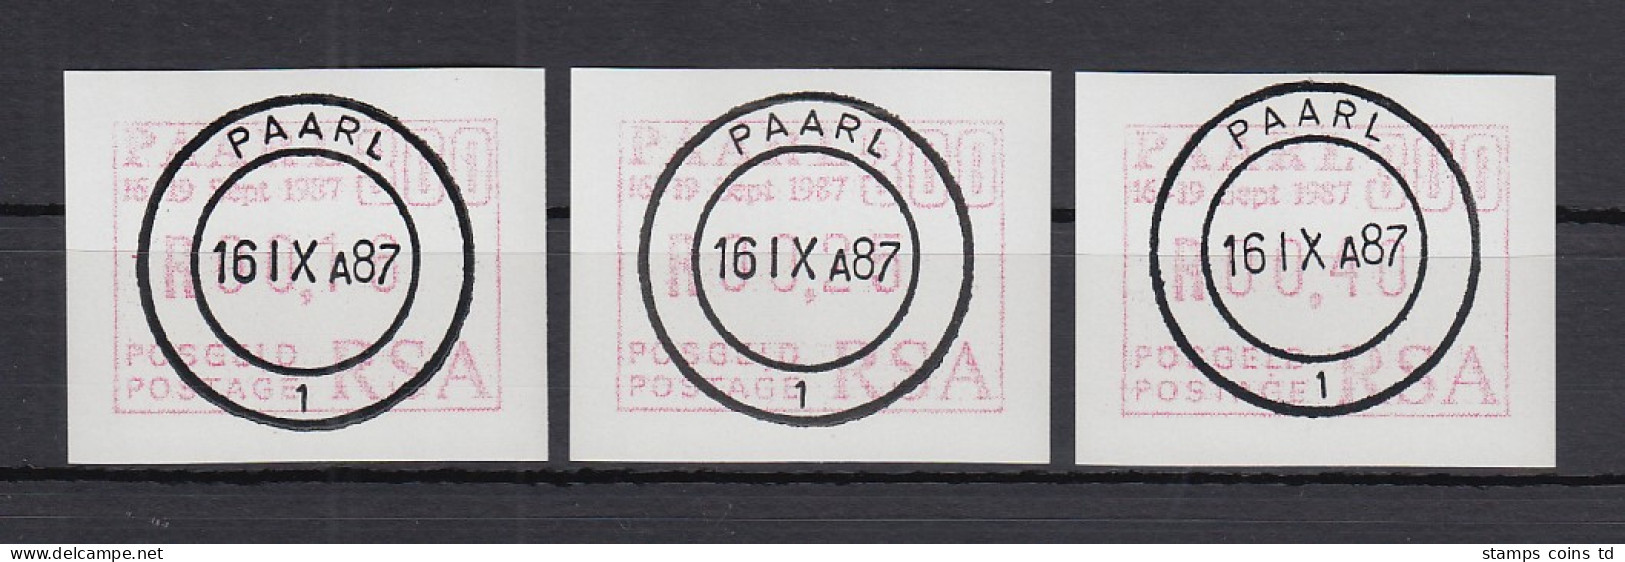 RSA 1987 Sonder-ATM PAARL Mi.-Nr. 4 Satz 16-25-40 Mit Voll-O 16-25-40 - Viñetas De Franqueo (Frama)